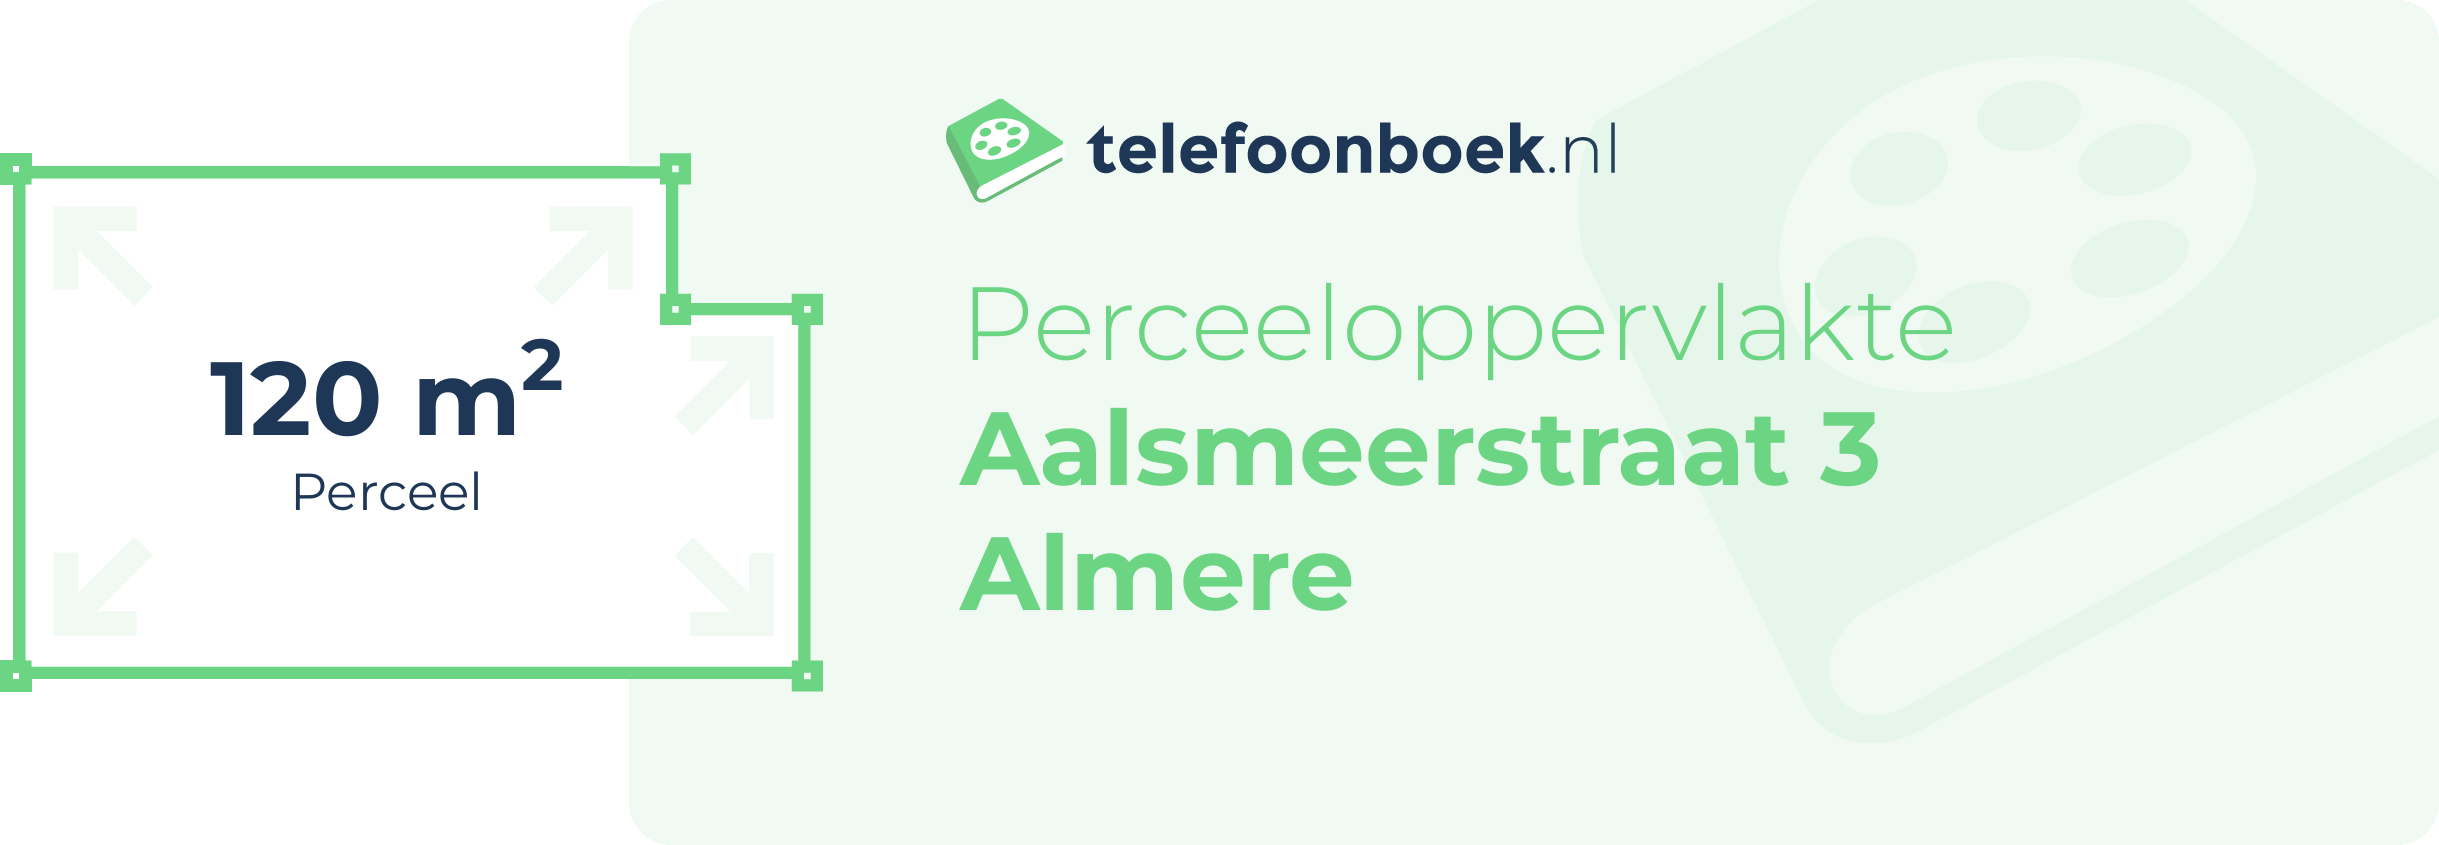 Perceeloppervlakte Aalsmeerstraat 3 Almere